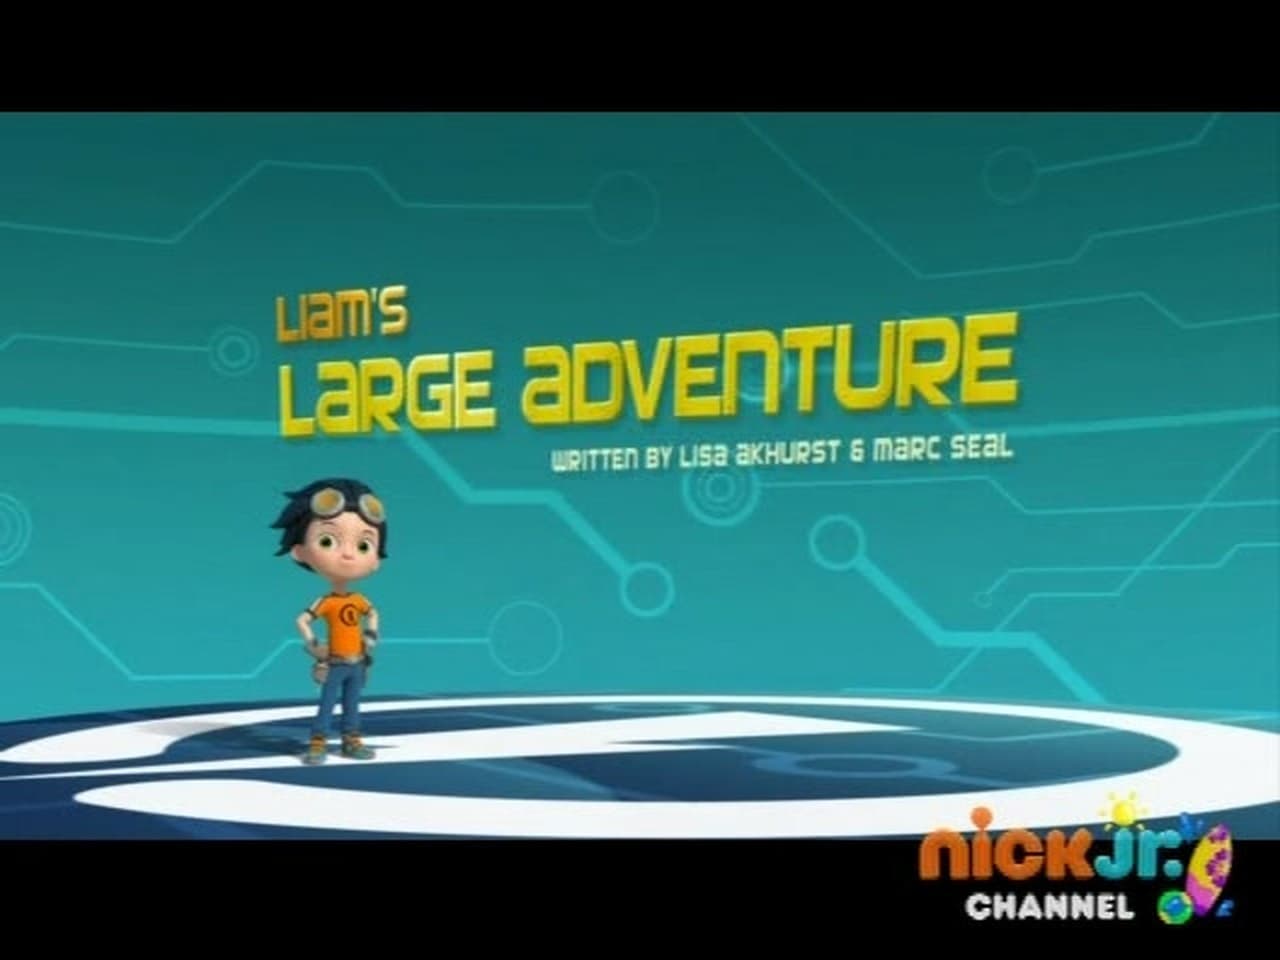 Liams Large Adventure